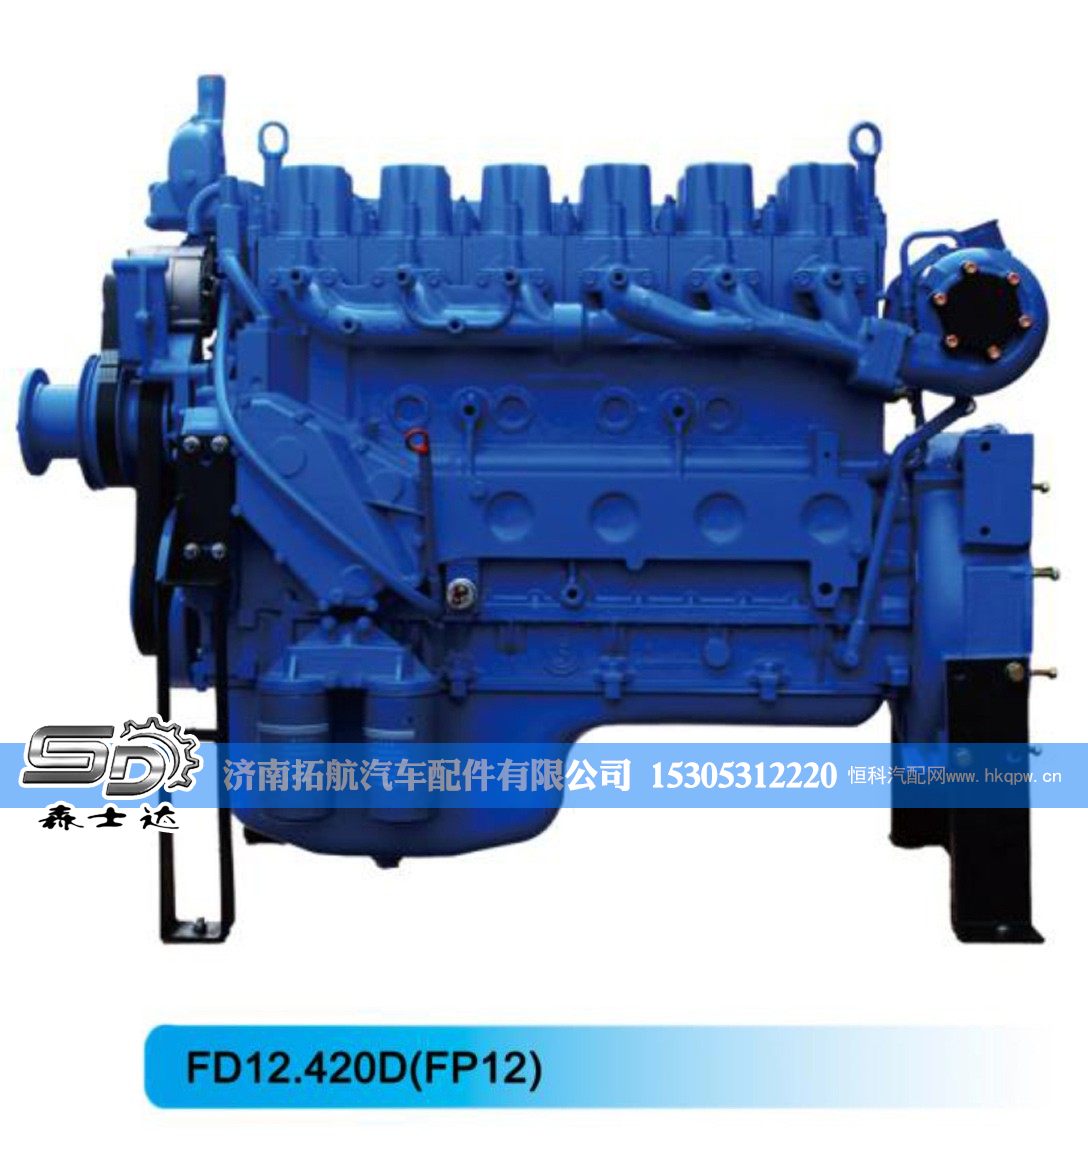 FD12.420D(FP12)发电机系列 【森士达】/FD12.420D(FP12)